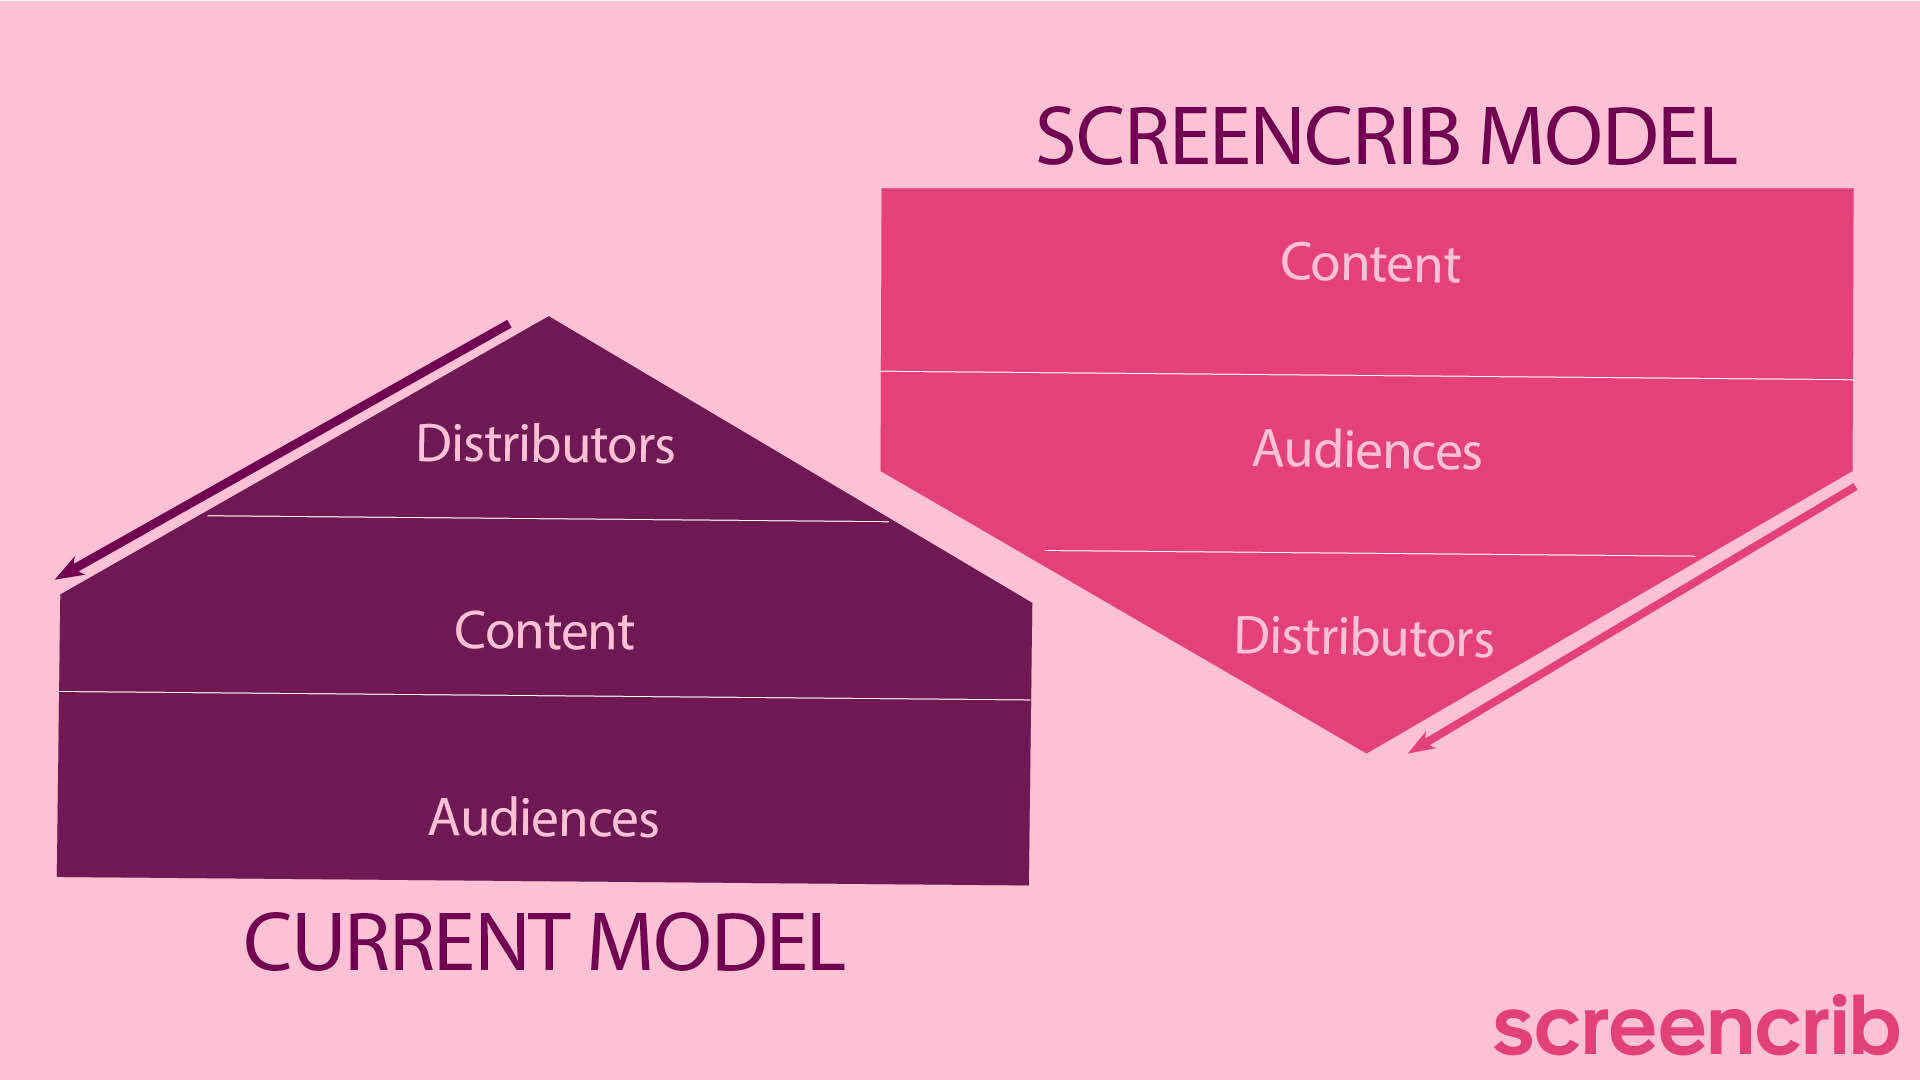 The Screencrib Model